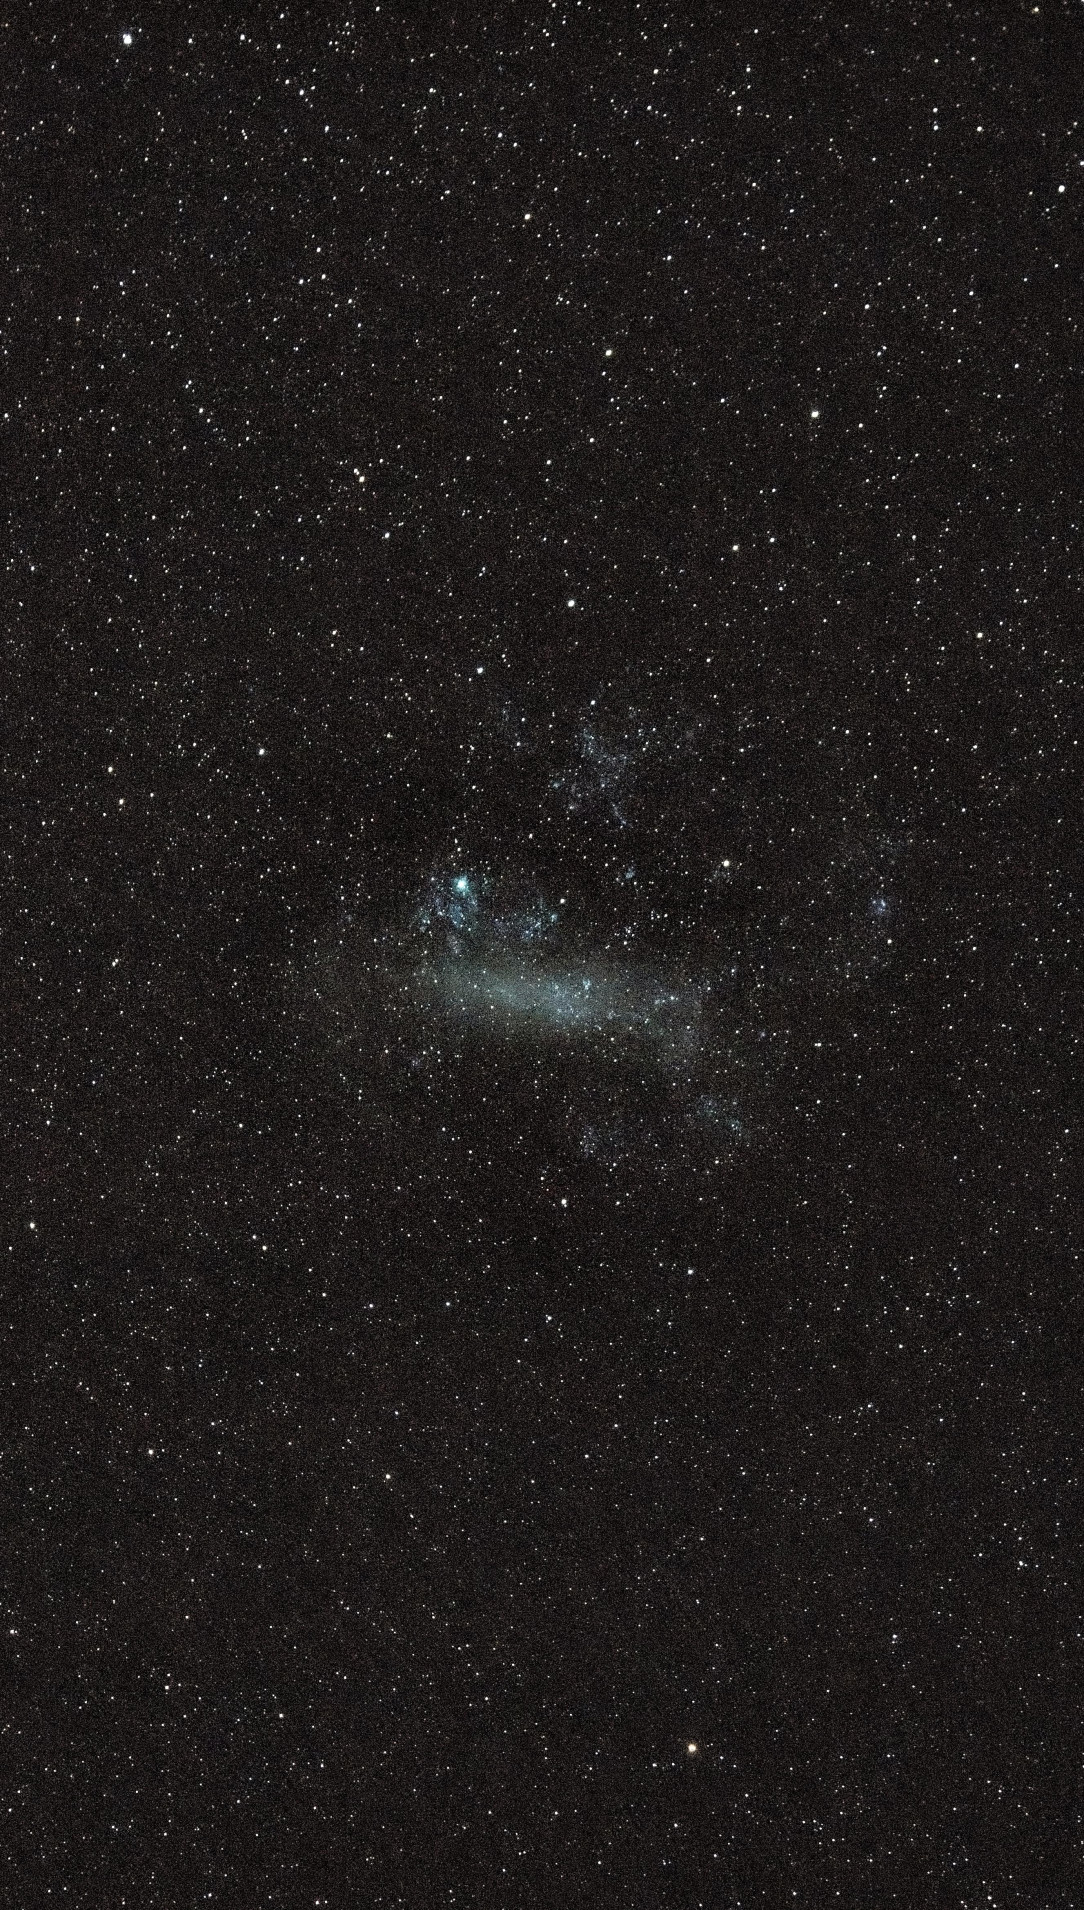 Large Magellanic Cloud shot at 50mm, using a kit lens 18-55mm